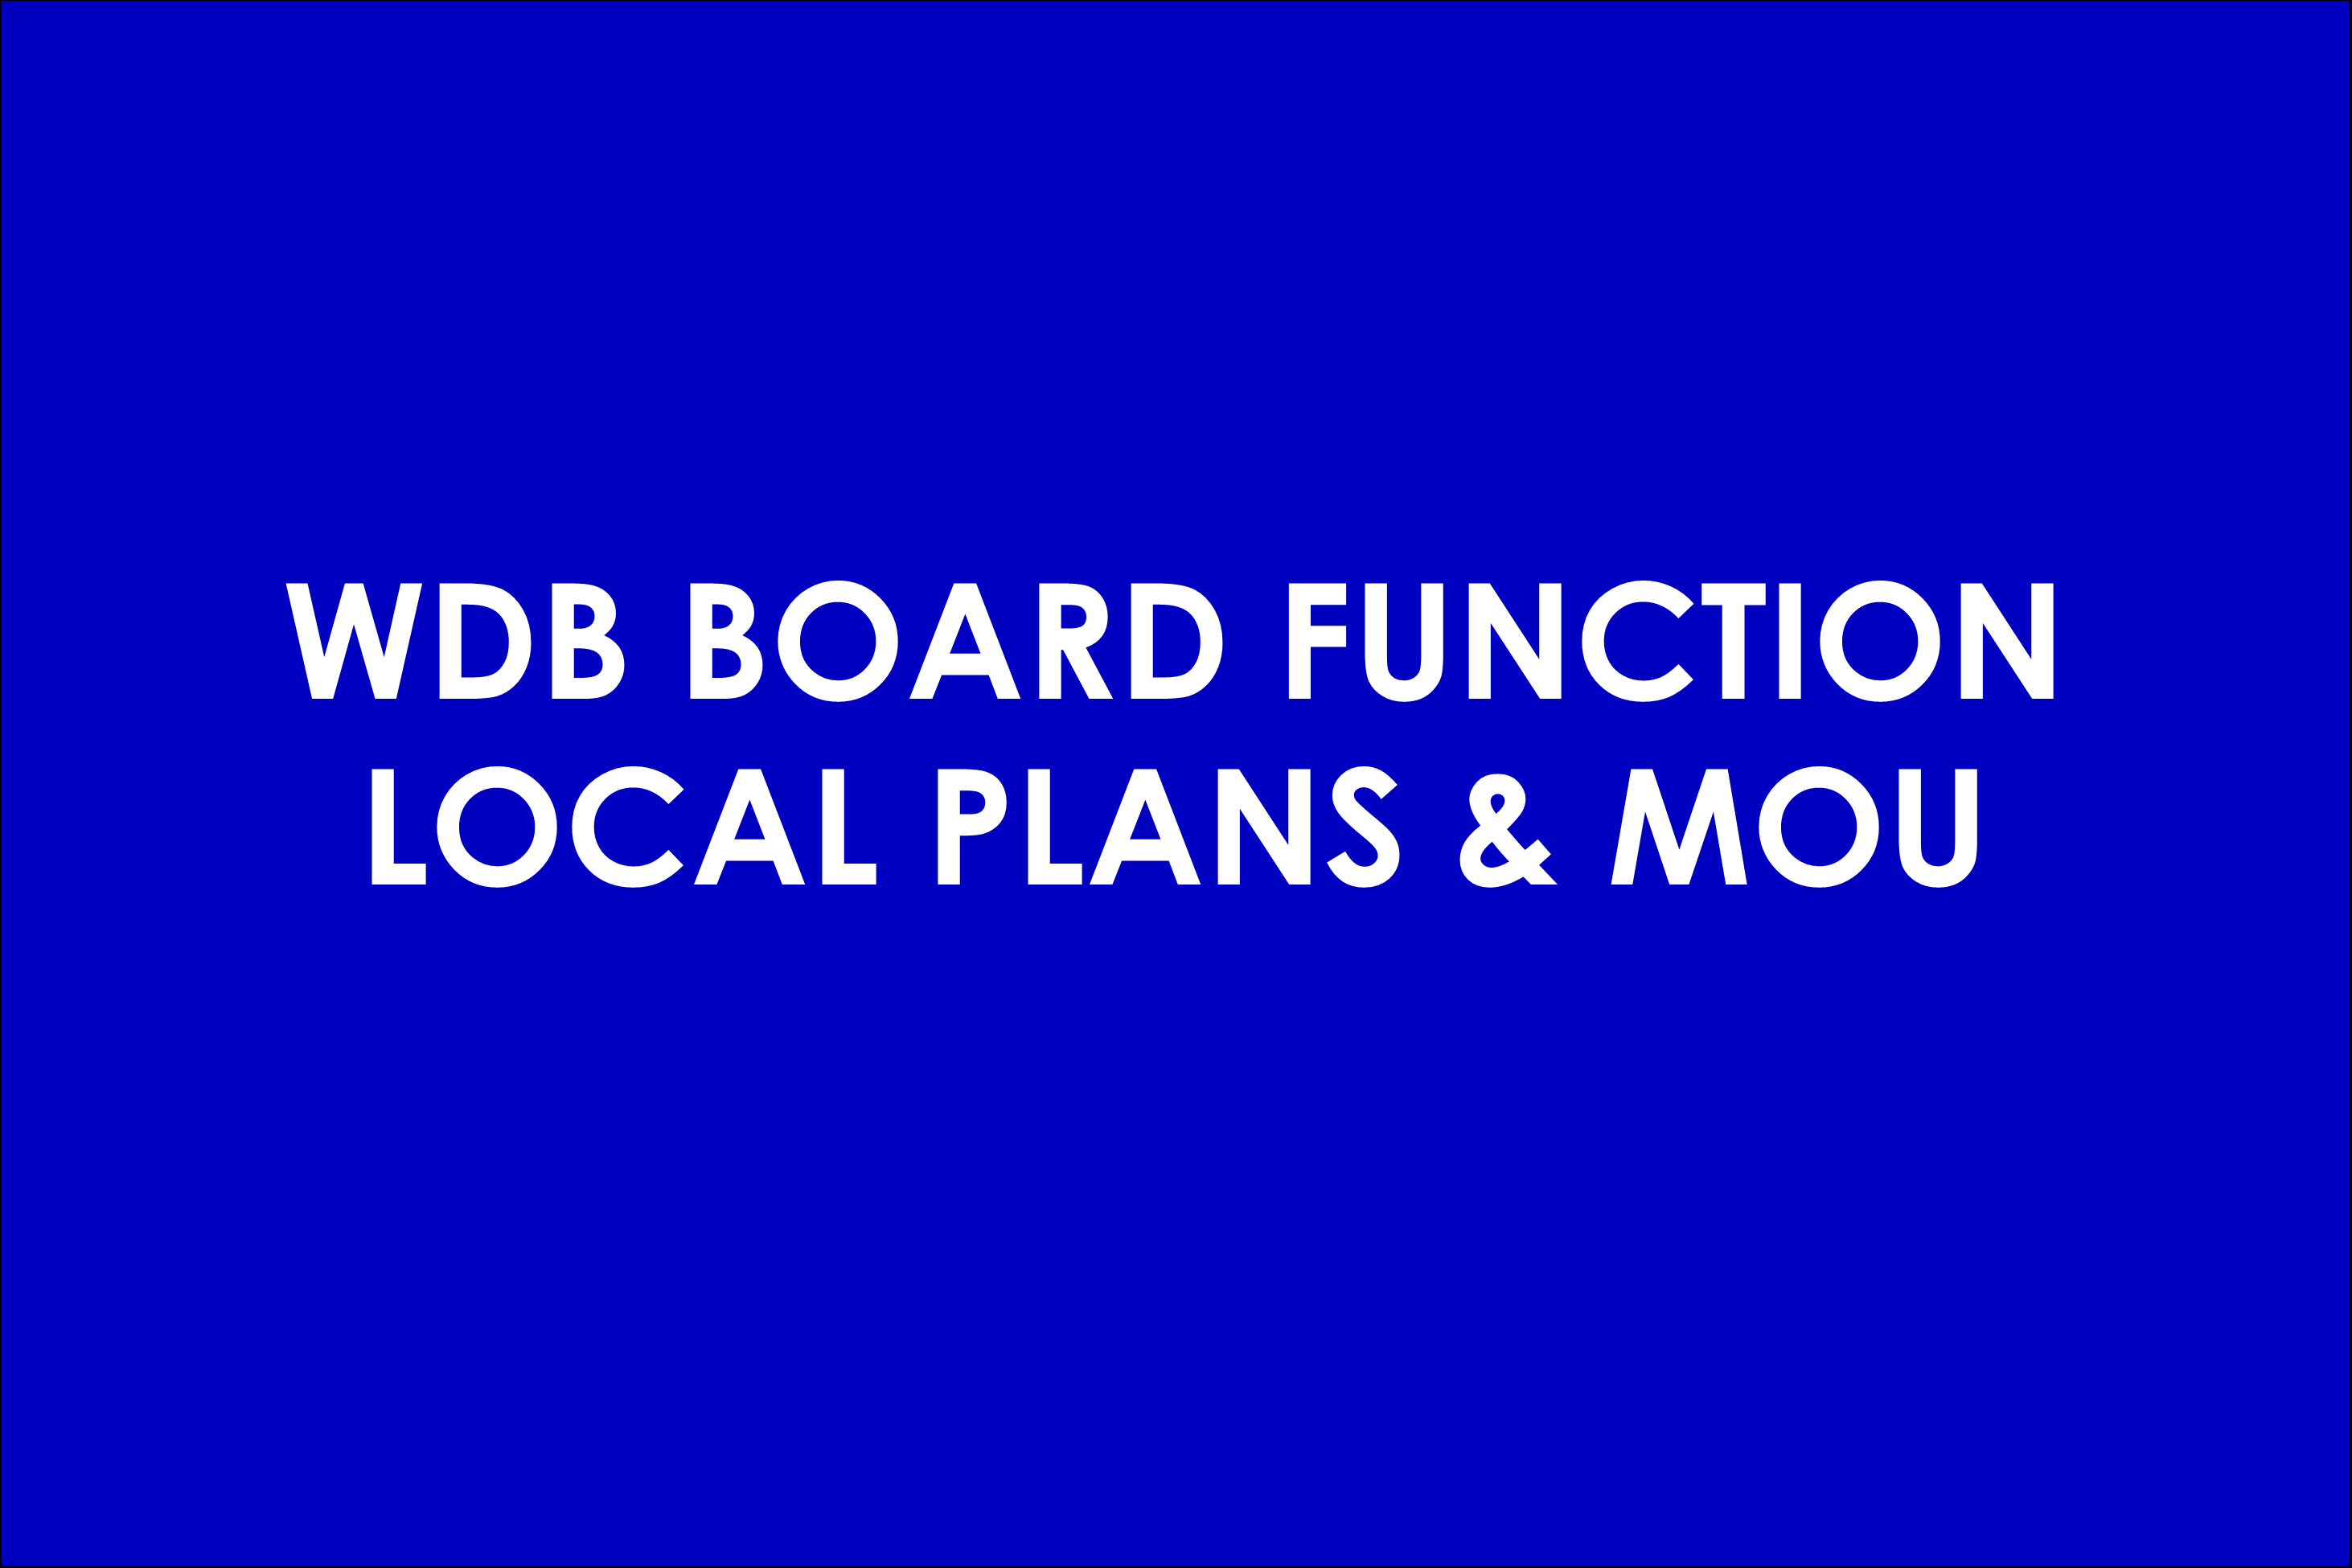 WDB local plan